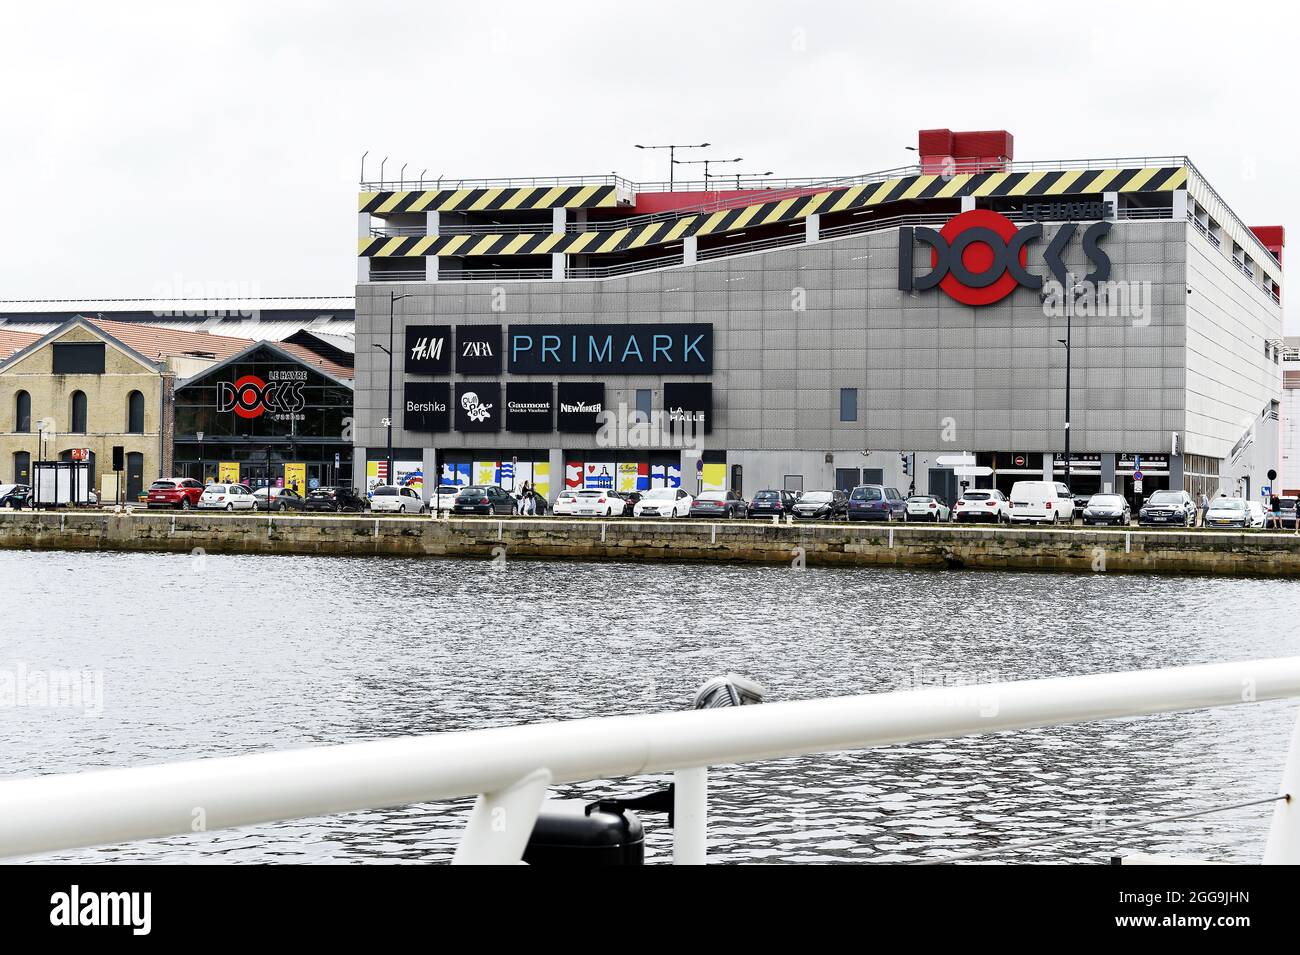 Docks Vauban - Le Havre - Seine Maritime - France Stock Photo - Alamy